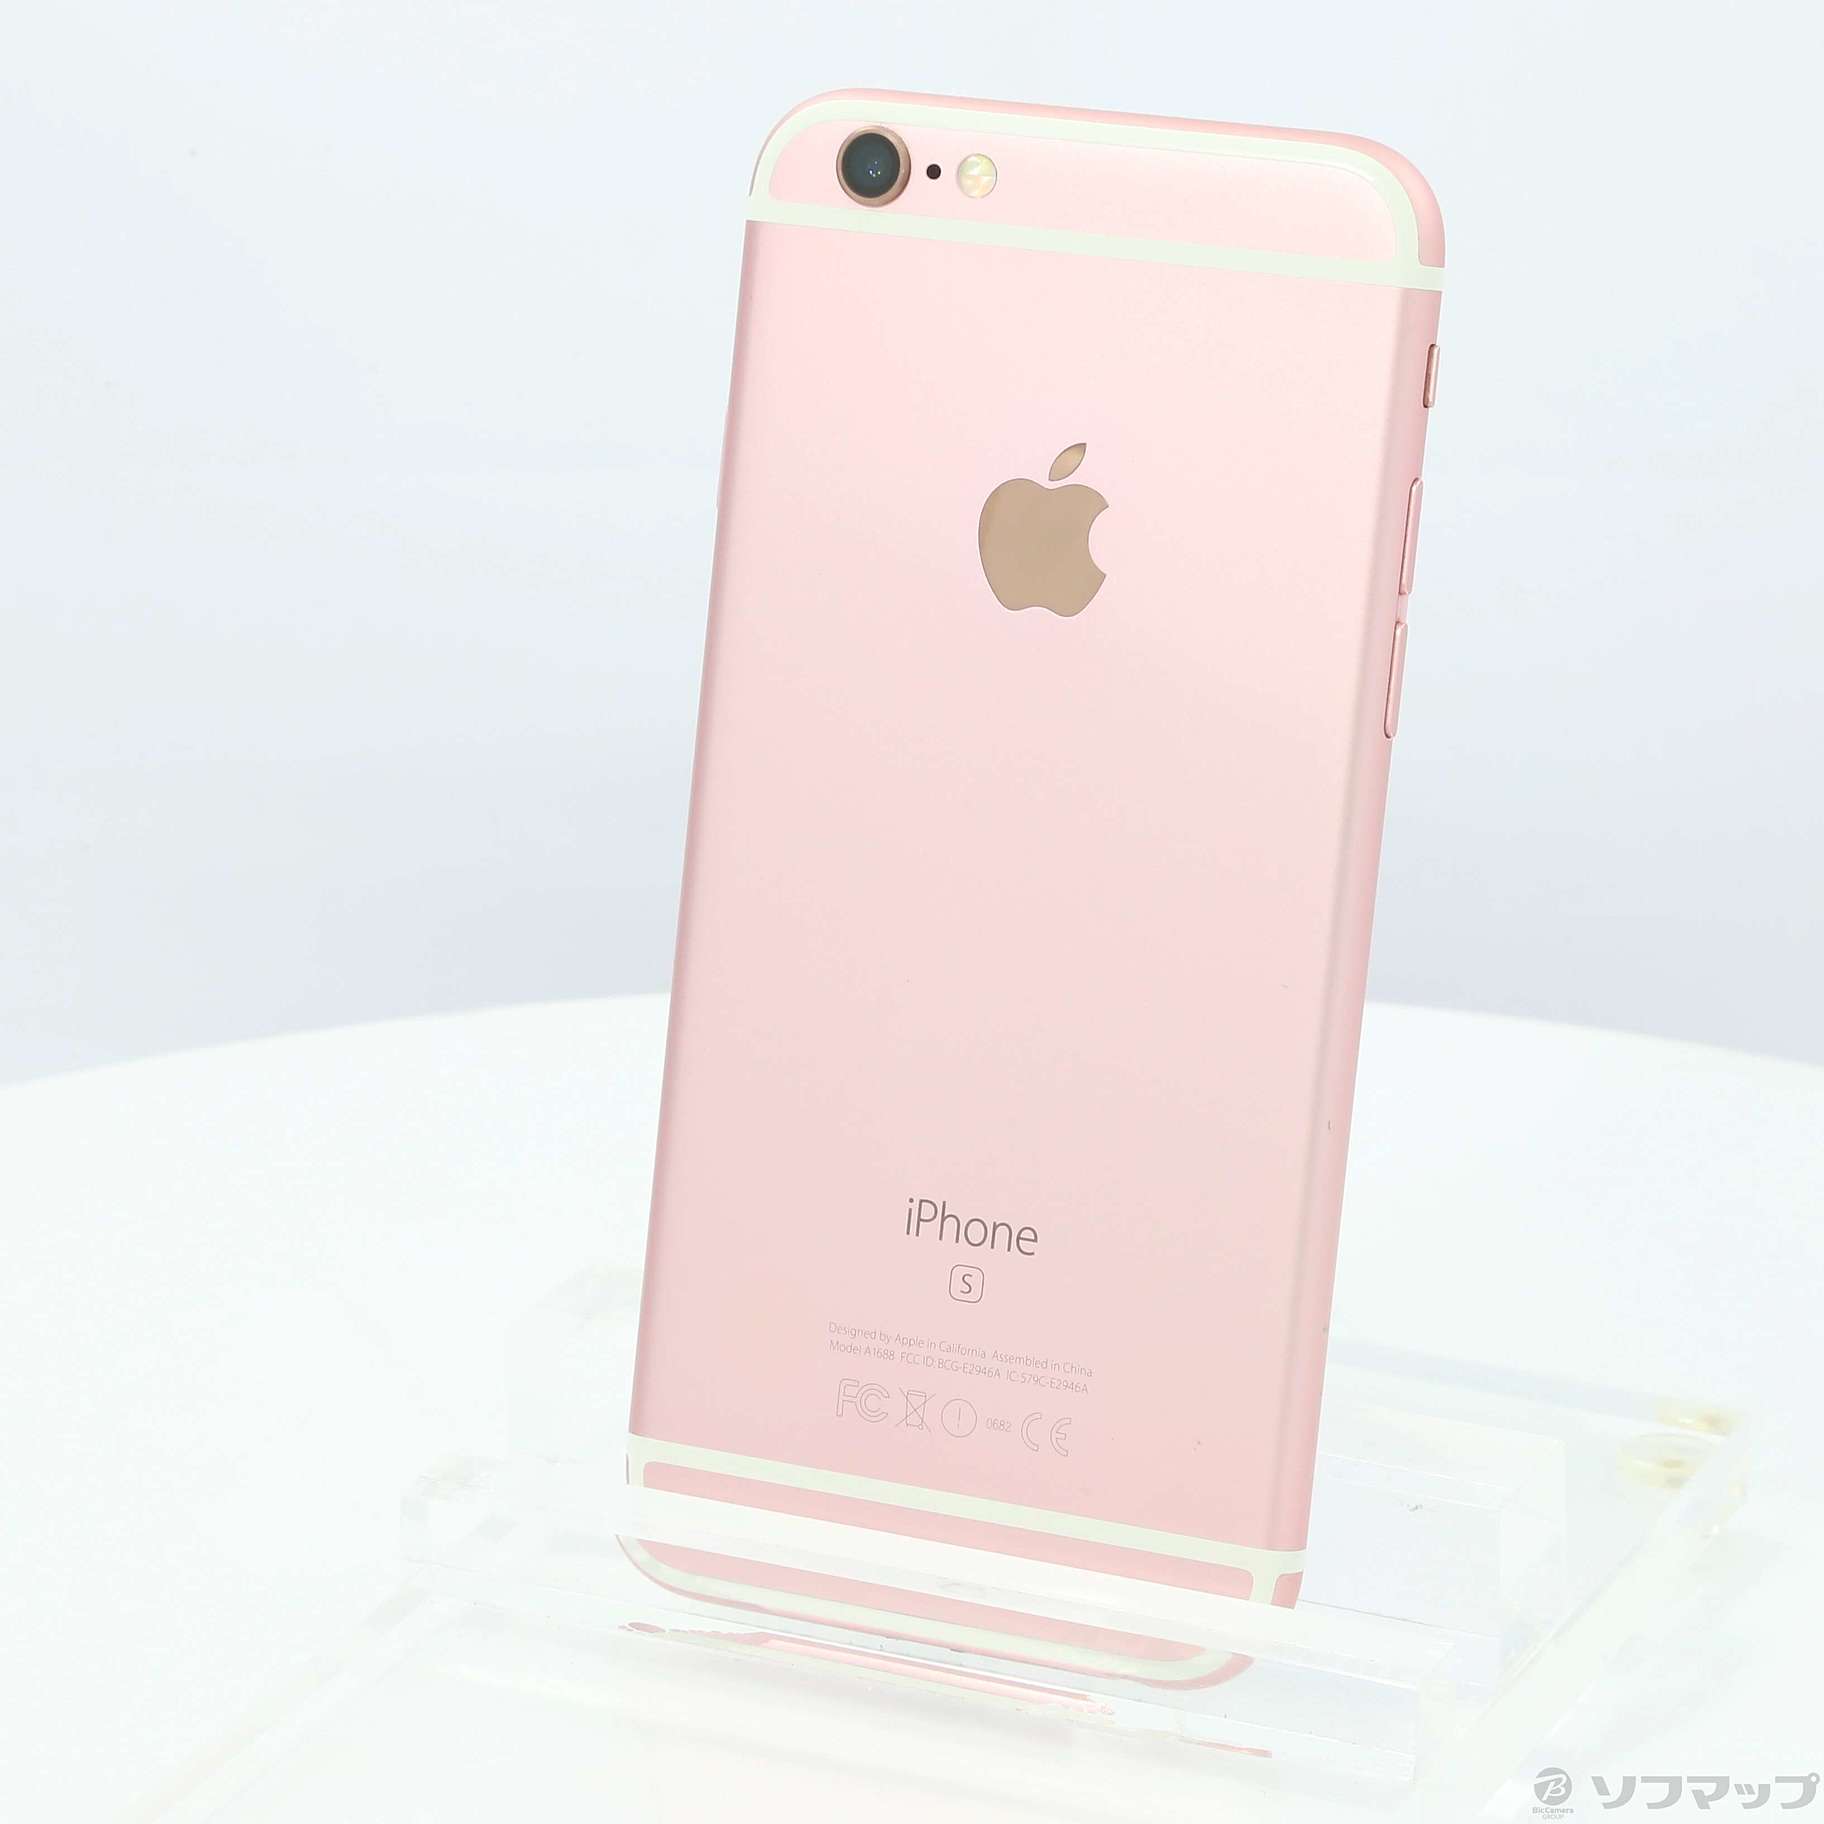 iPhone 6s Plus Gold 16 GB SIMフリー - スマートフォン本体